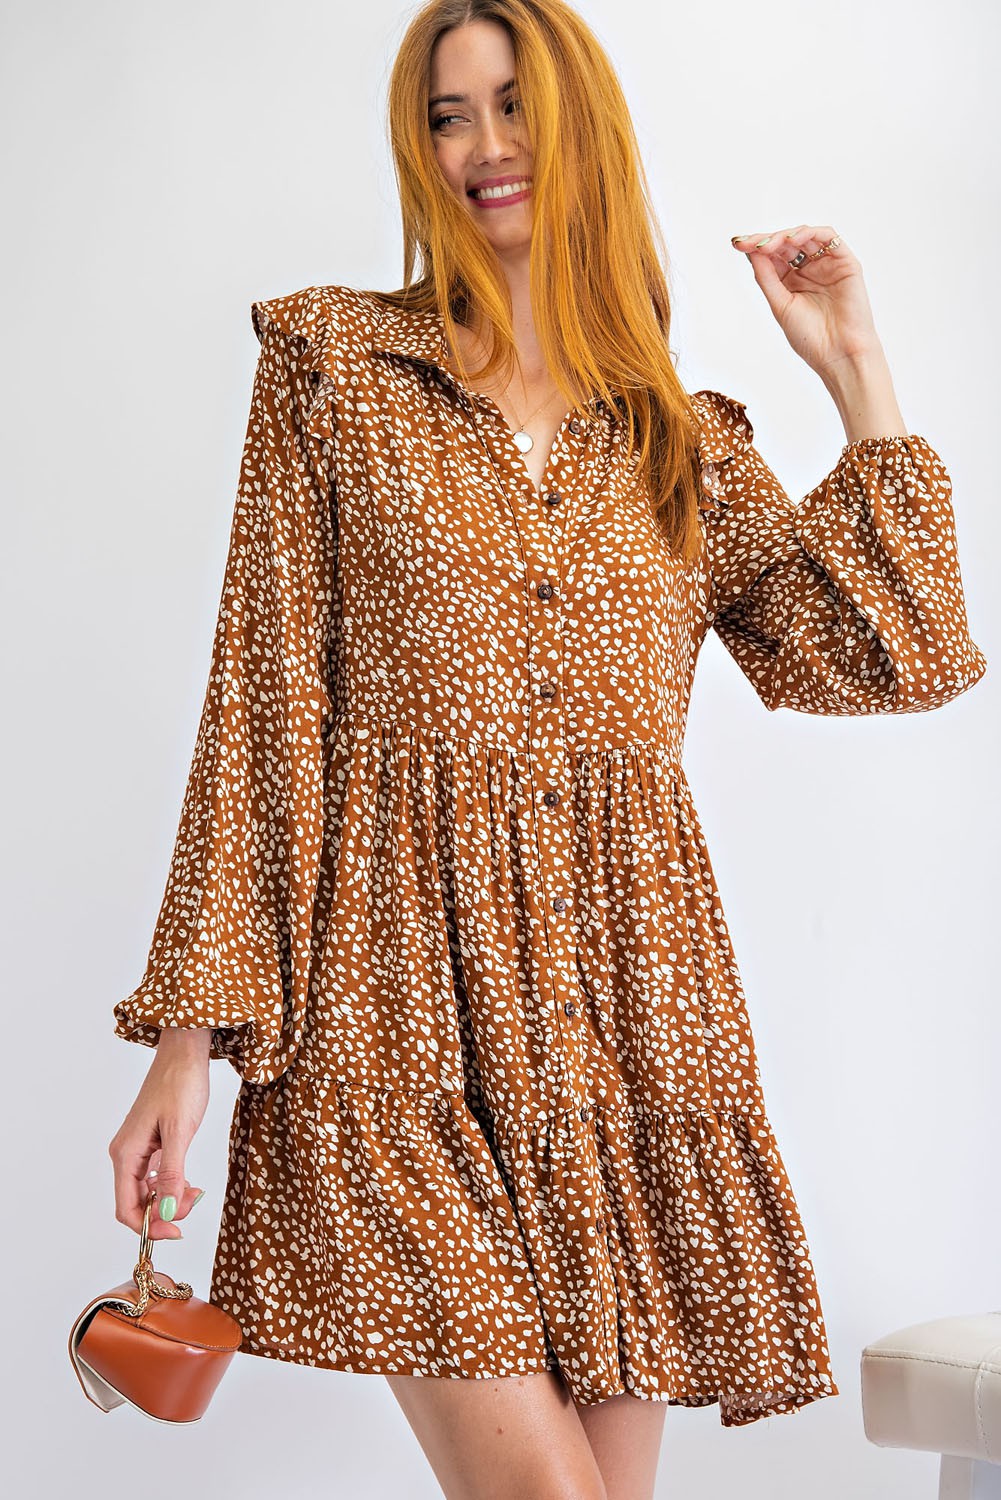 Come Back to Me Leopard Print Dress, Rust - Monogram Market